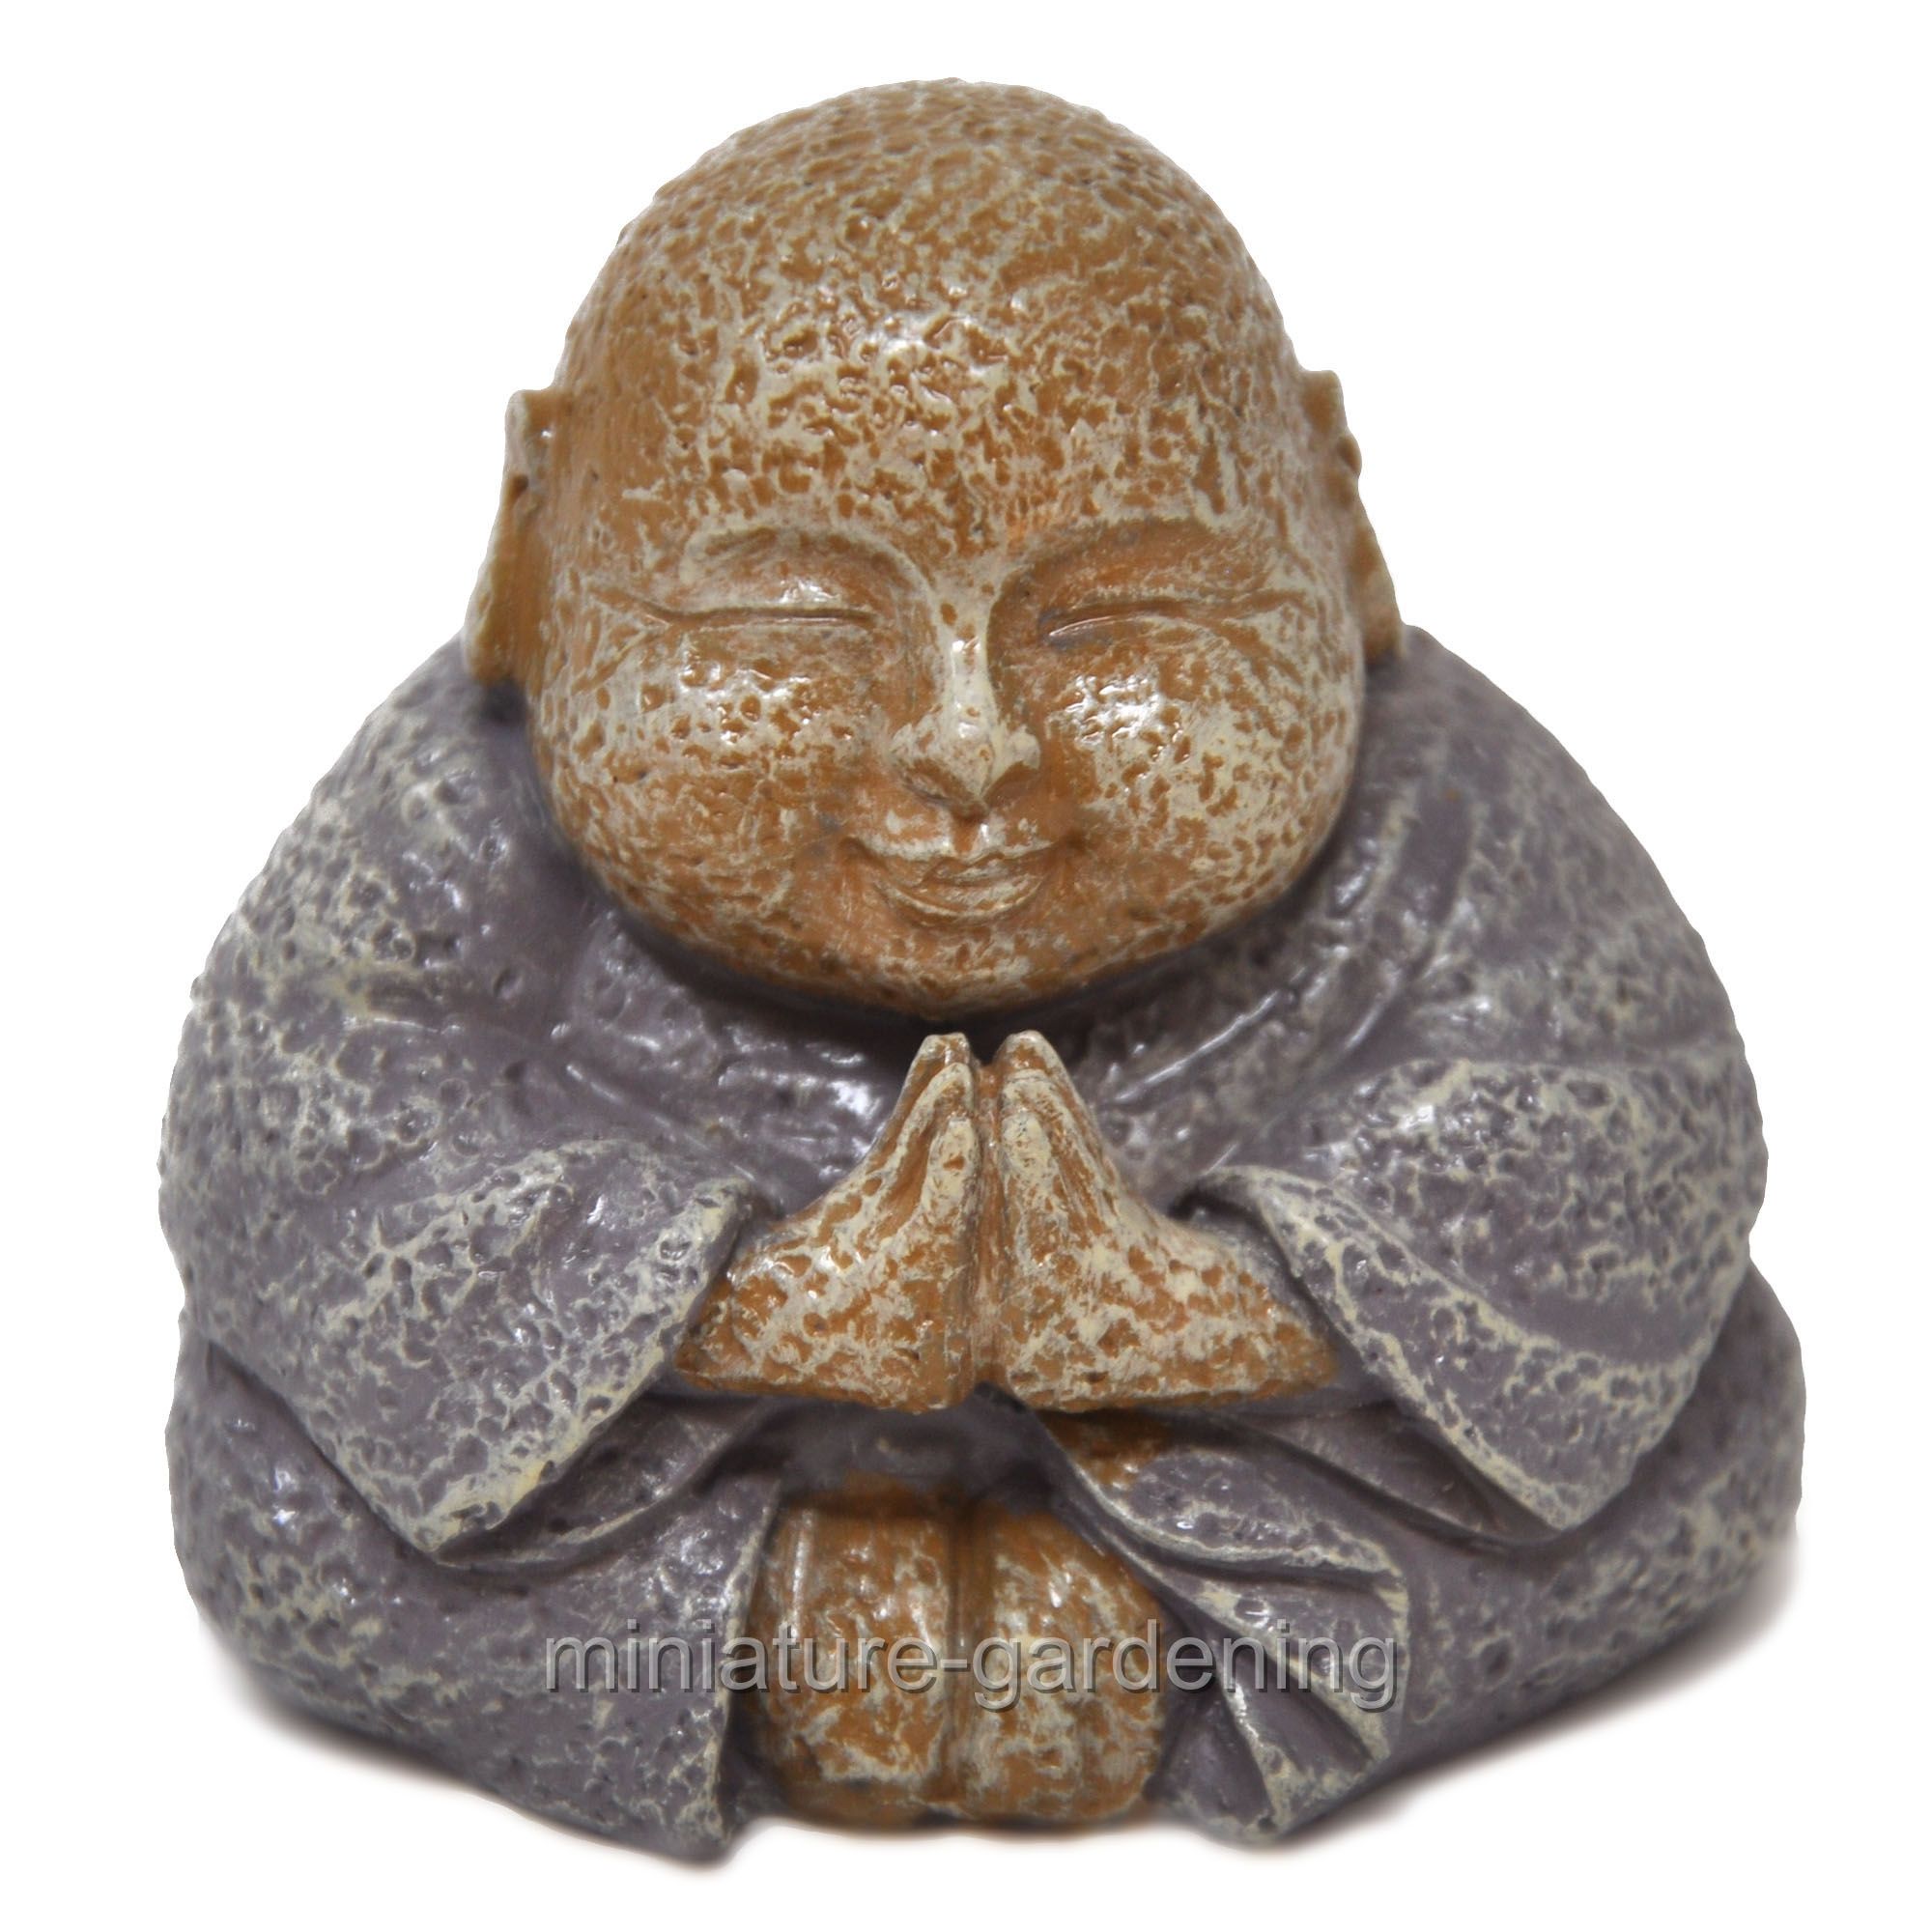 Miniature Smiling Buddha for Miniature Garden, Fairy Garden - image 1 of 2